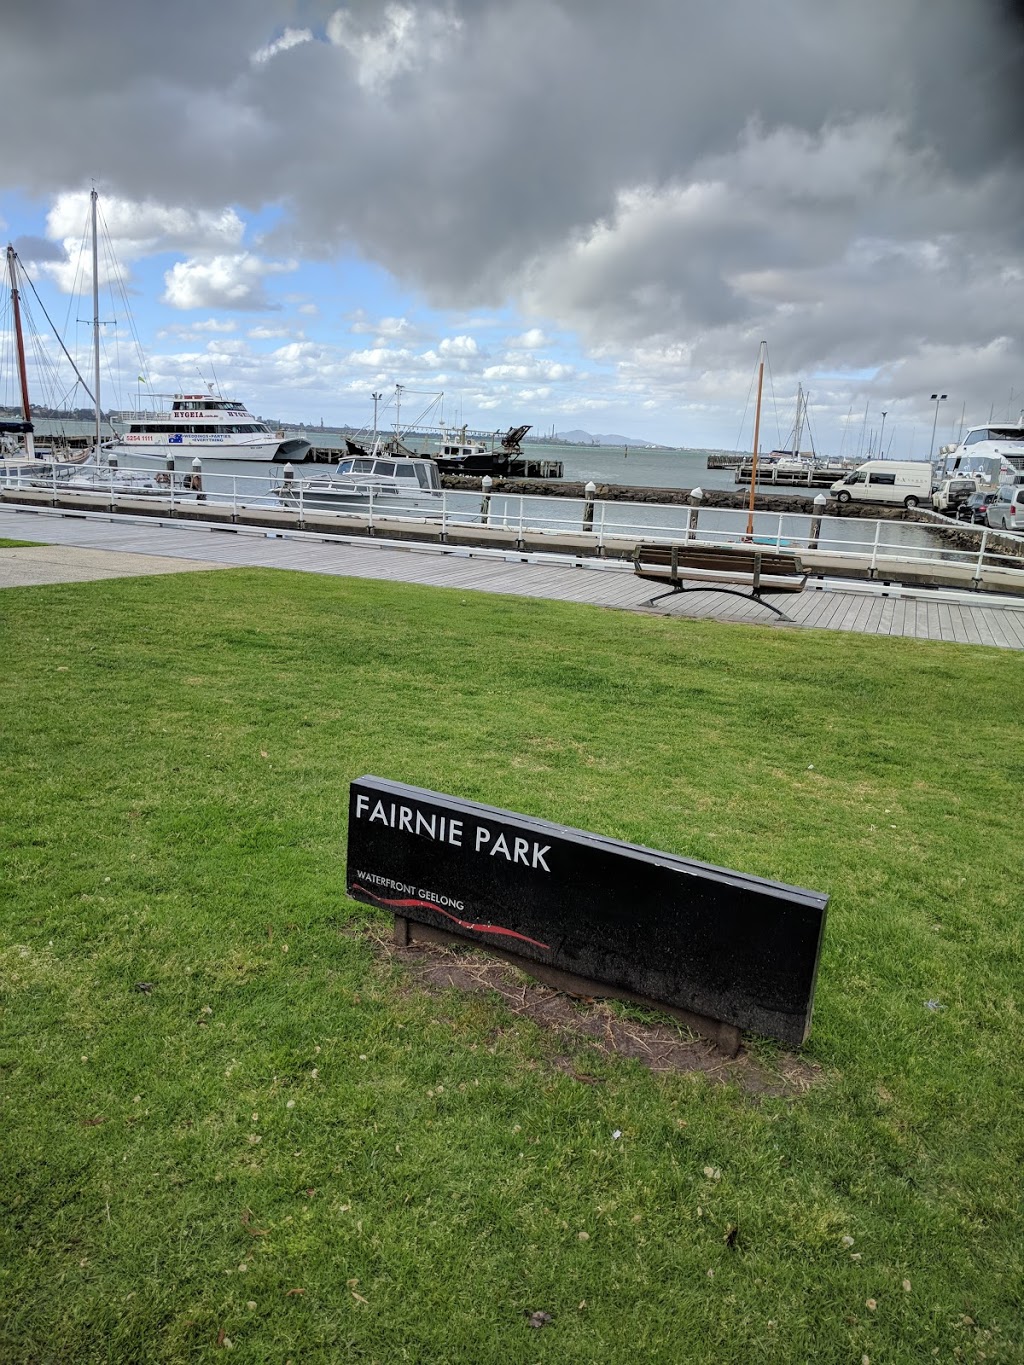 Fairnie Park | park | Victoria, Australia